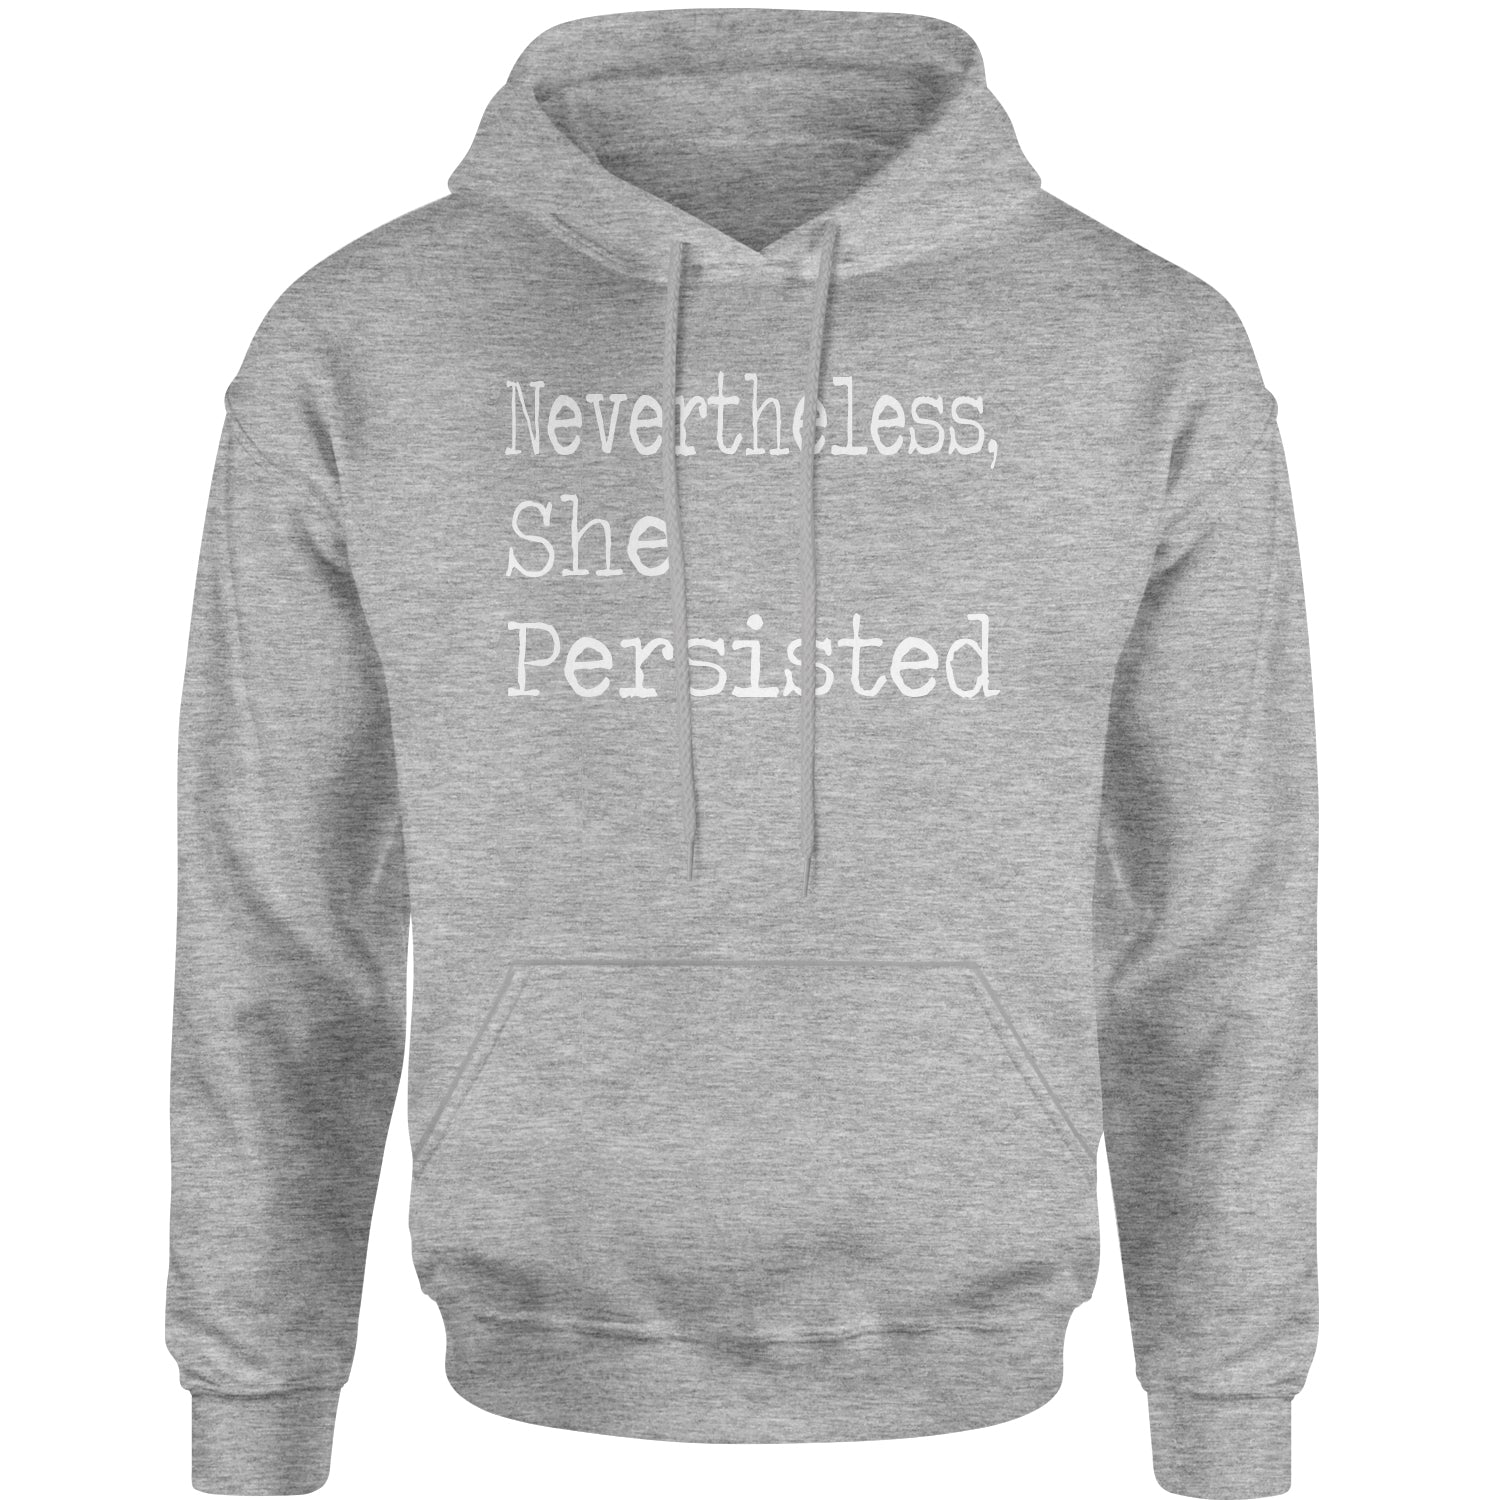 Nevertheless, She Persisted Adult Hoodie Sweatshirt 2020, feminism, feminist, kamala, letlizspeak, mamala, mcconnell, mitch, momala, mommala by Expression Tees